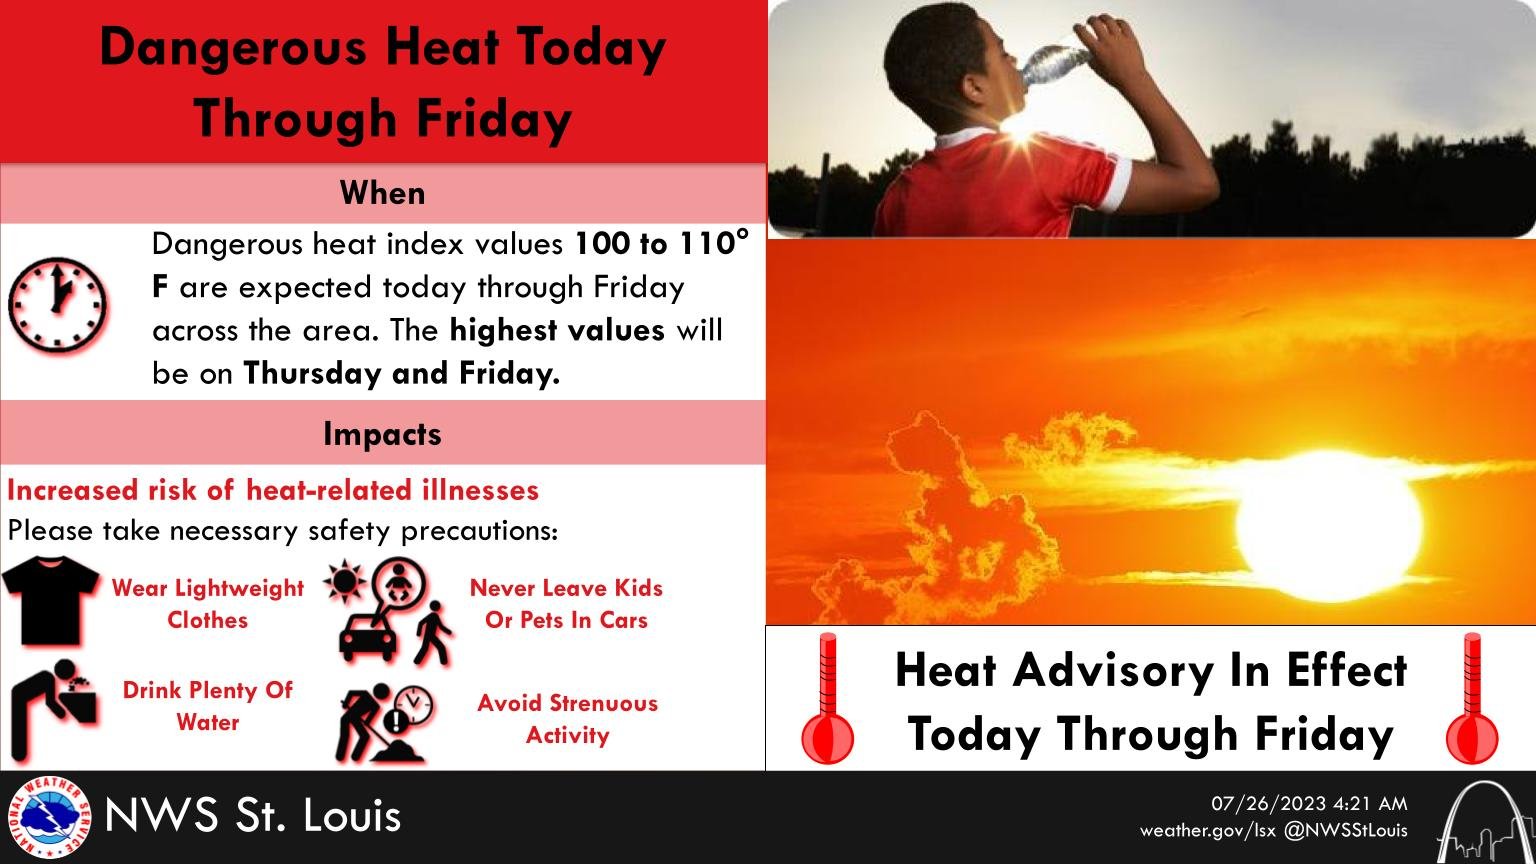 (LISTEN): OSHA emphasizes safety, with heat advisory in effect in mid-Missouri